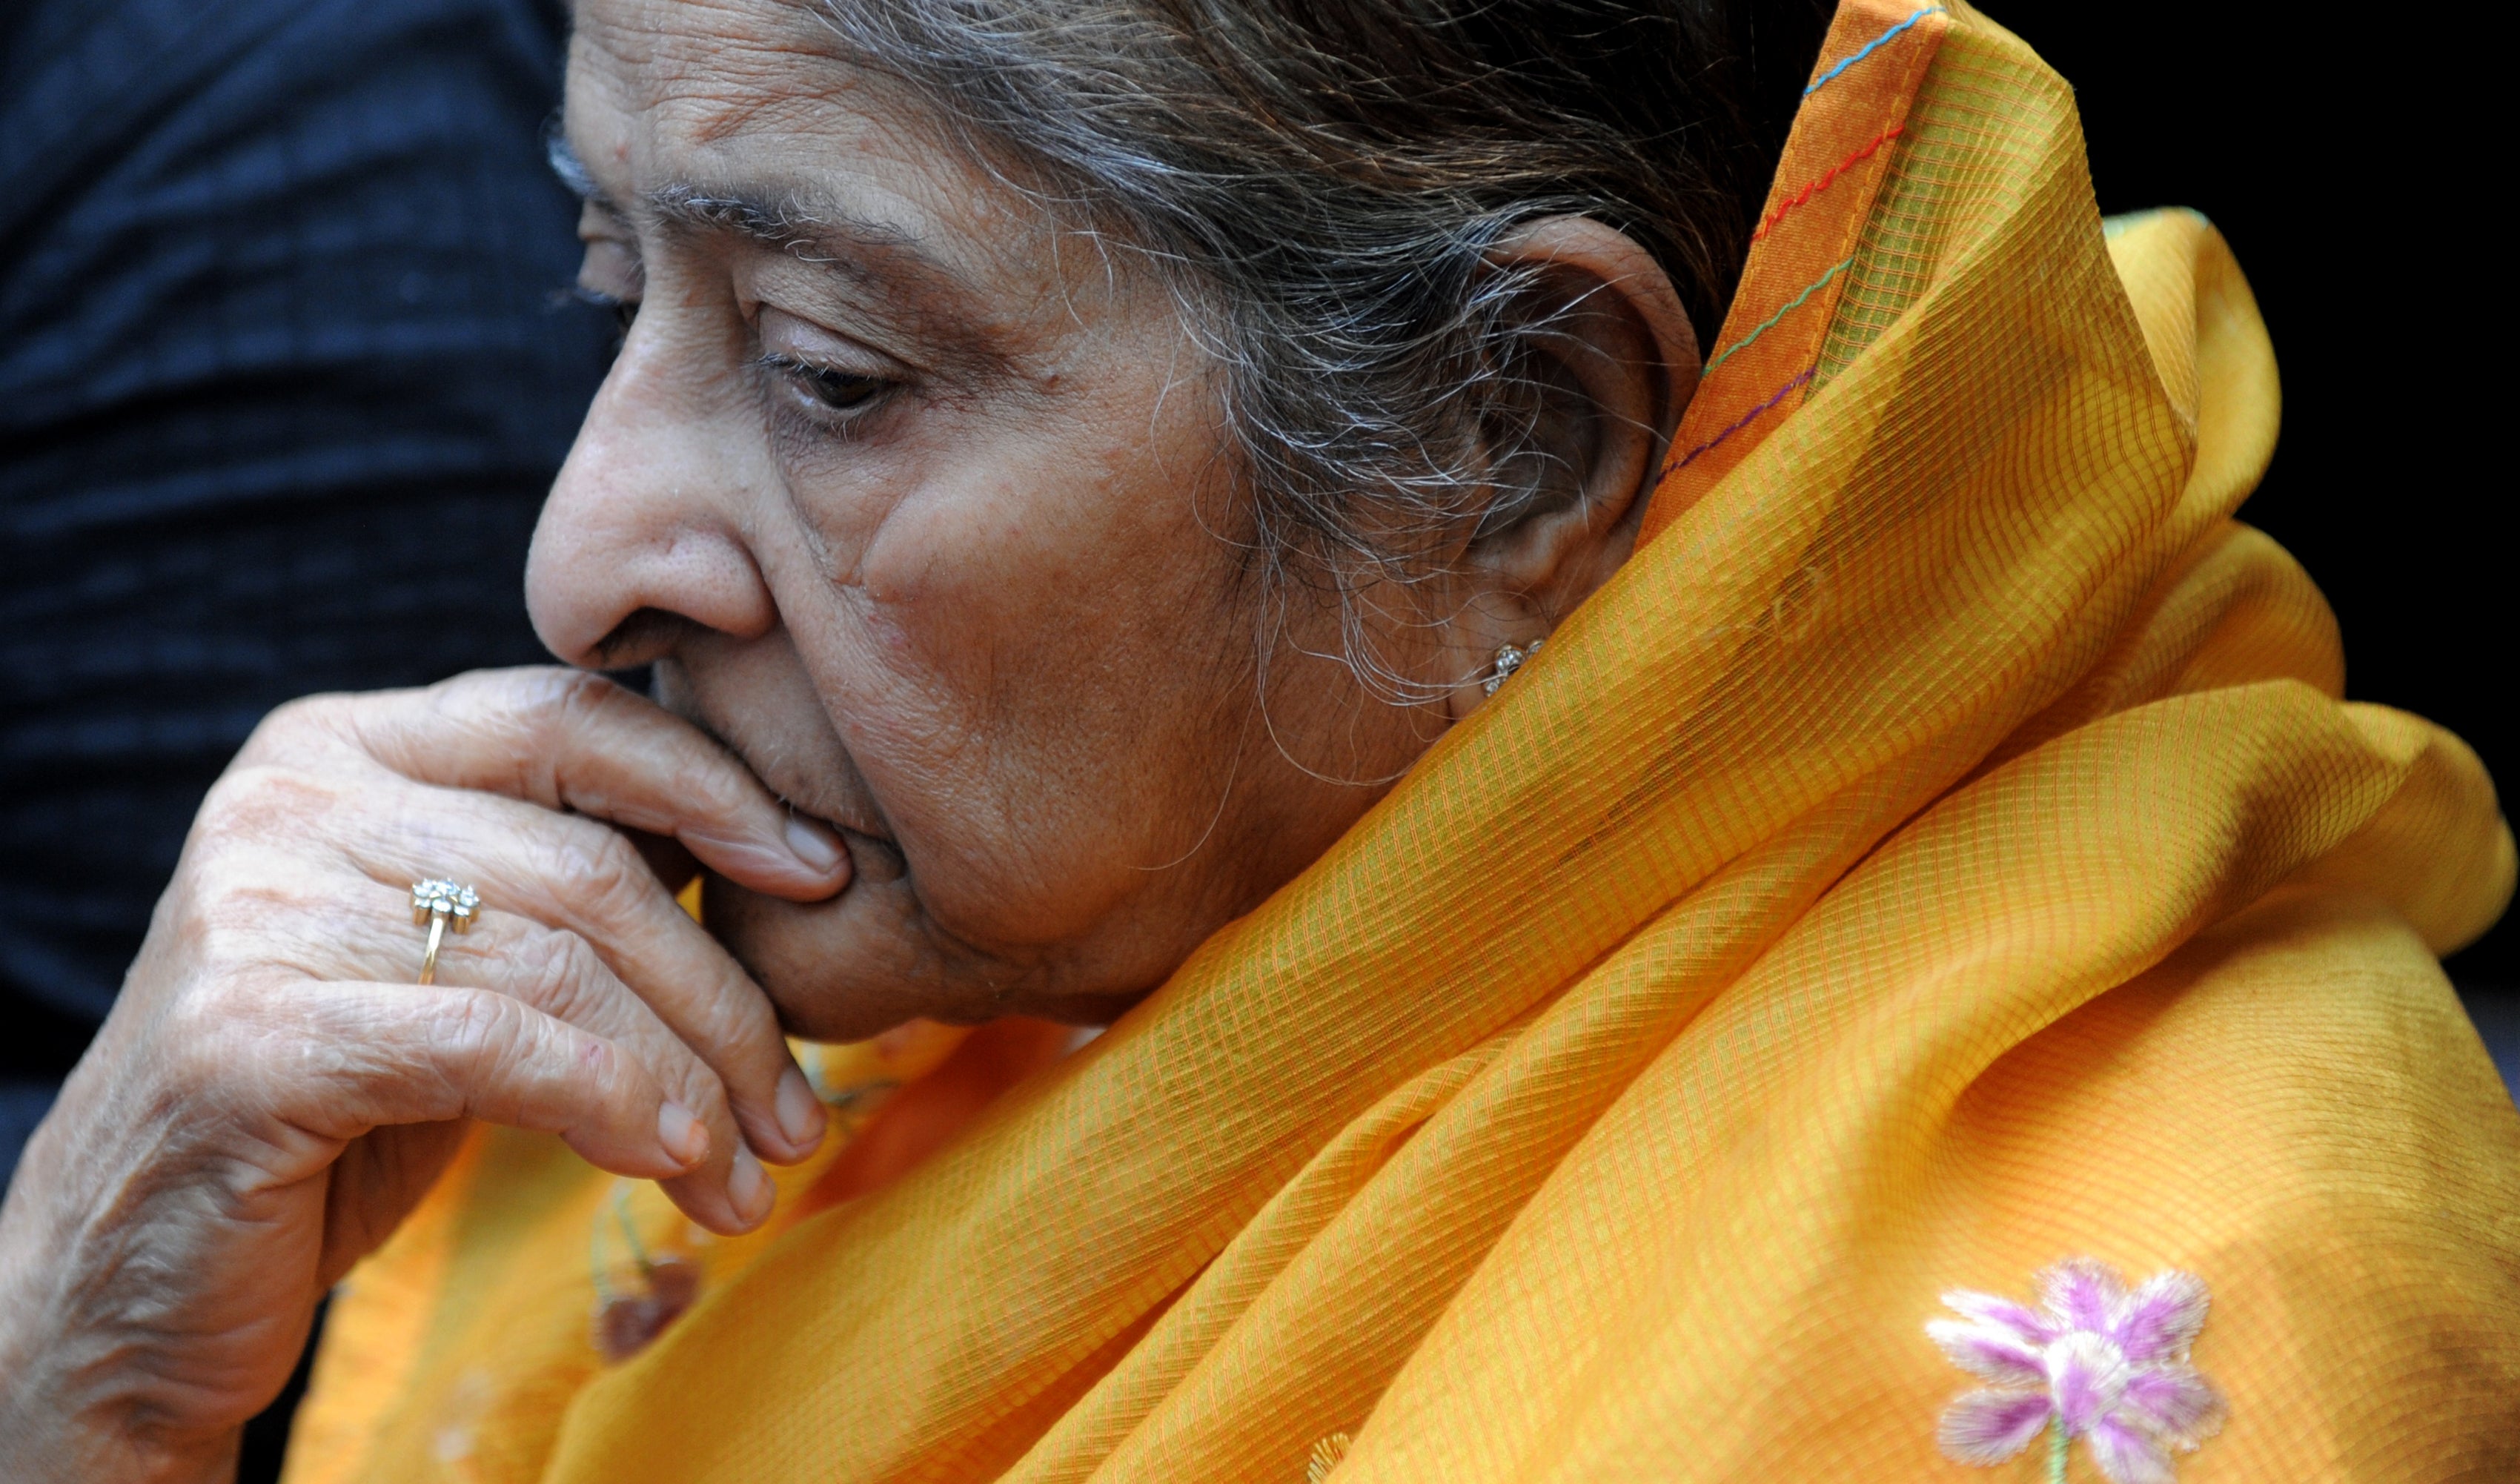 83-year-old Zakia Jafri